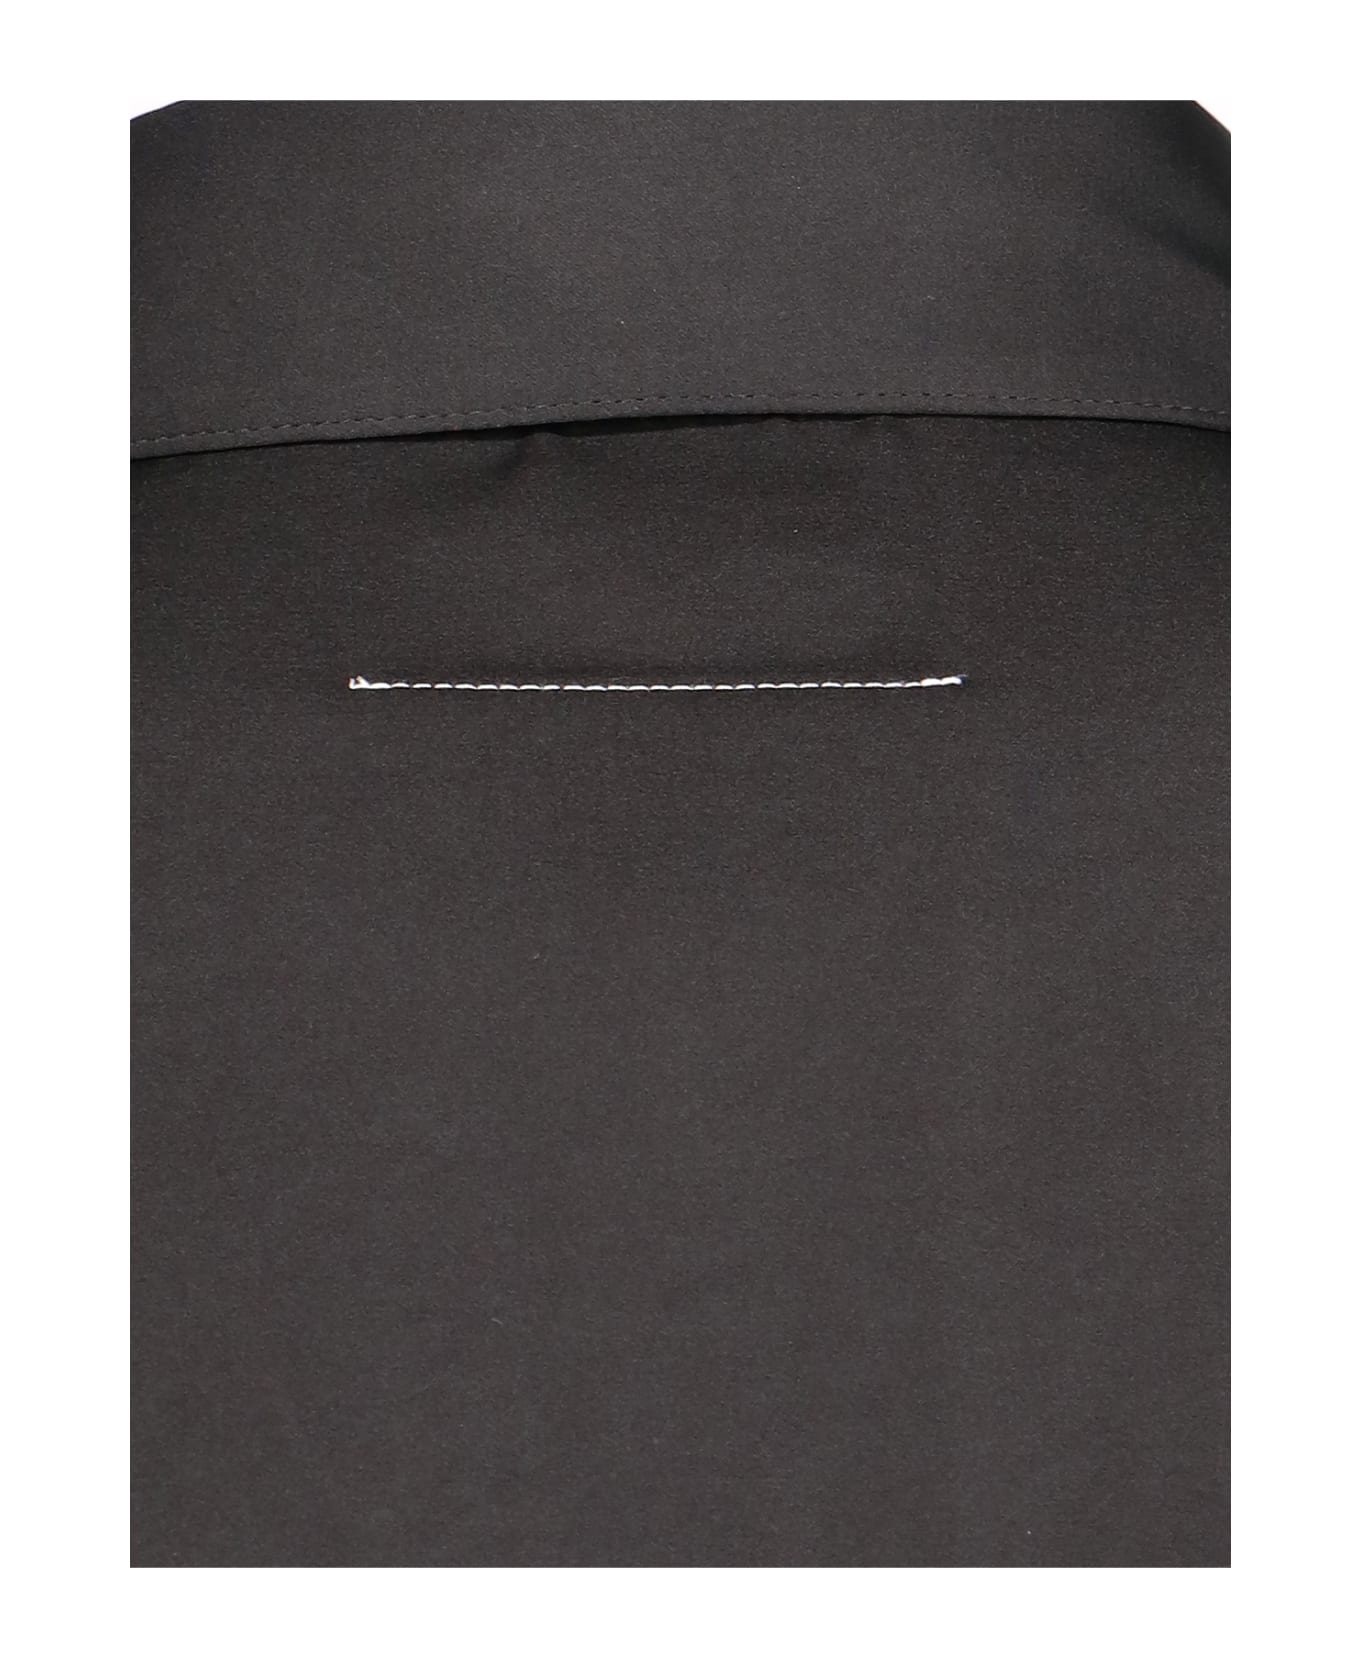 MM6 Maison Margiela Camicia A Maniche Lunghe Shirt/dress - Black